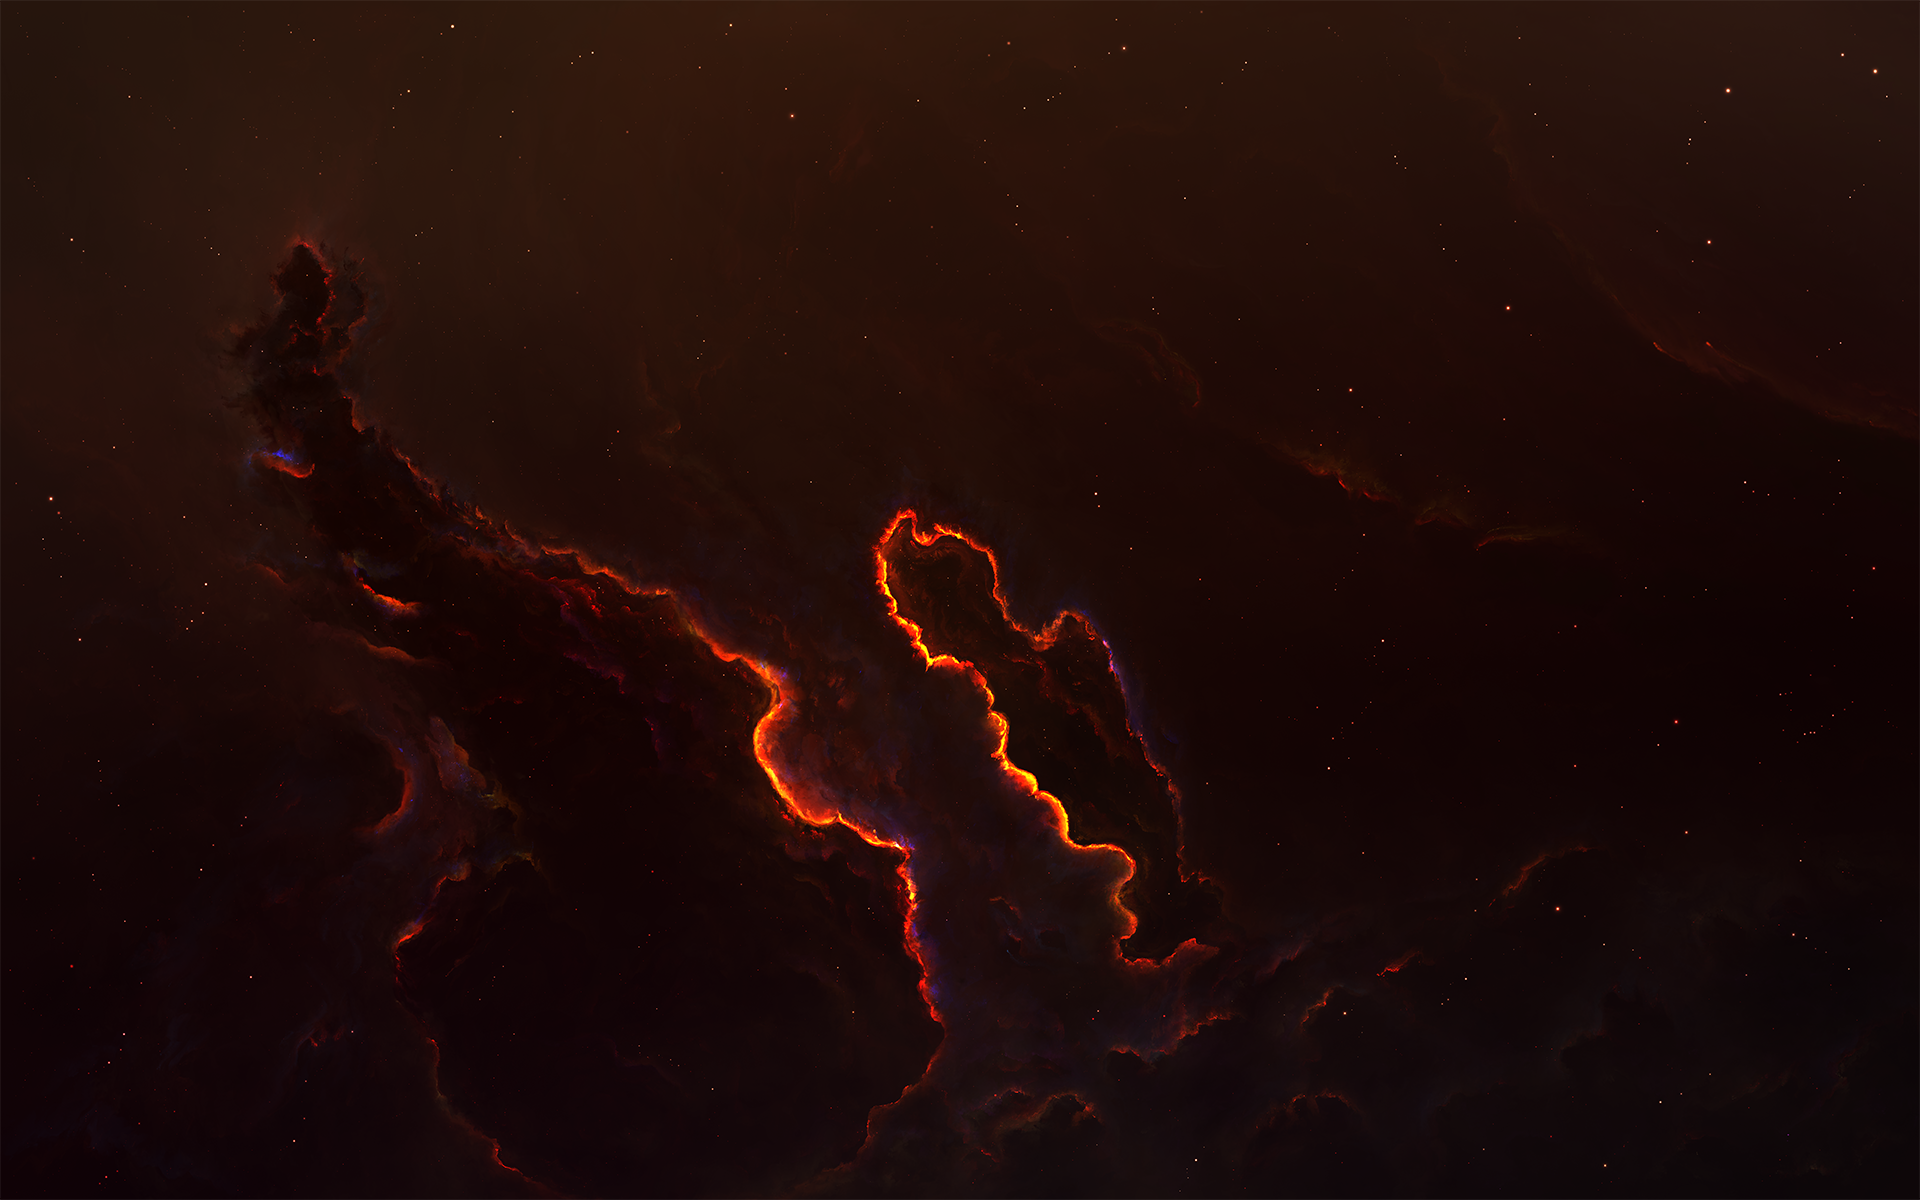 Akrino Nebula by Starkiteckt